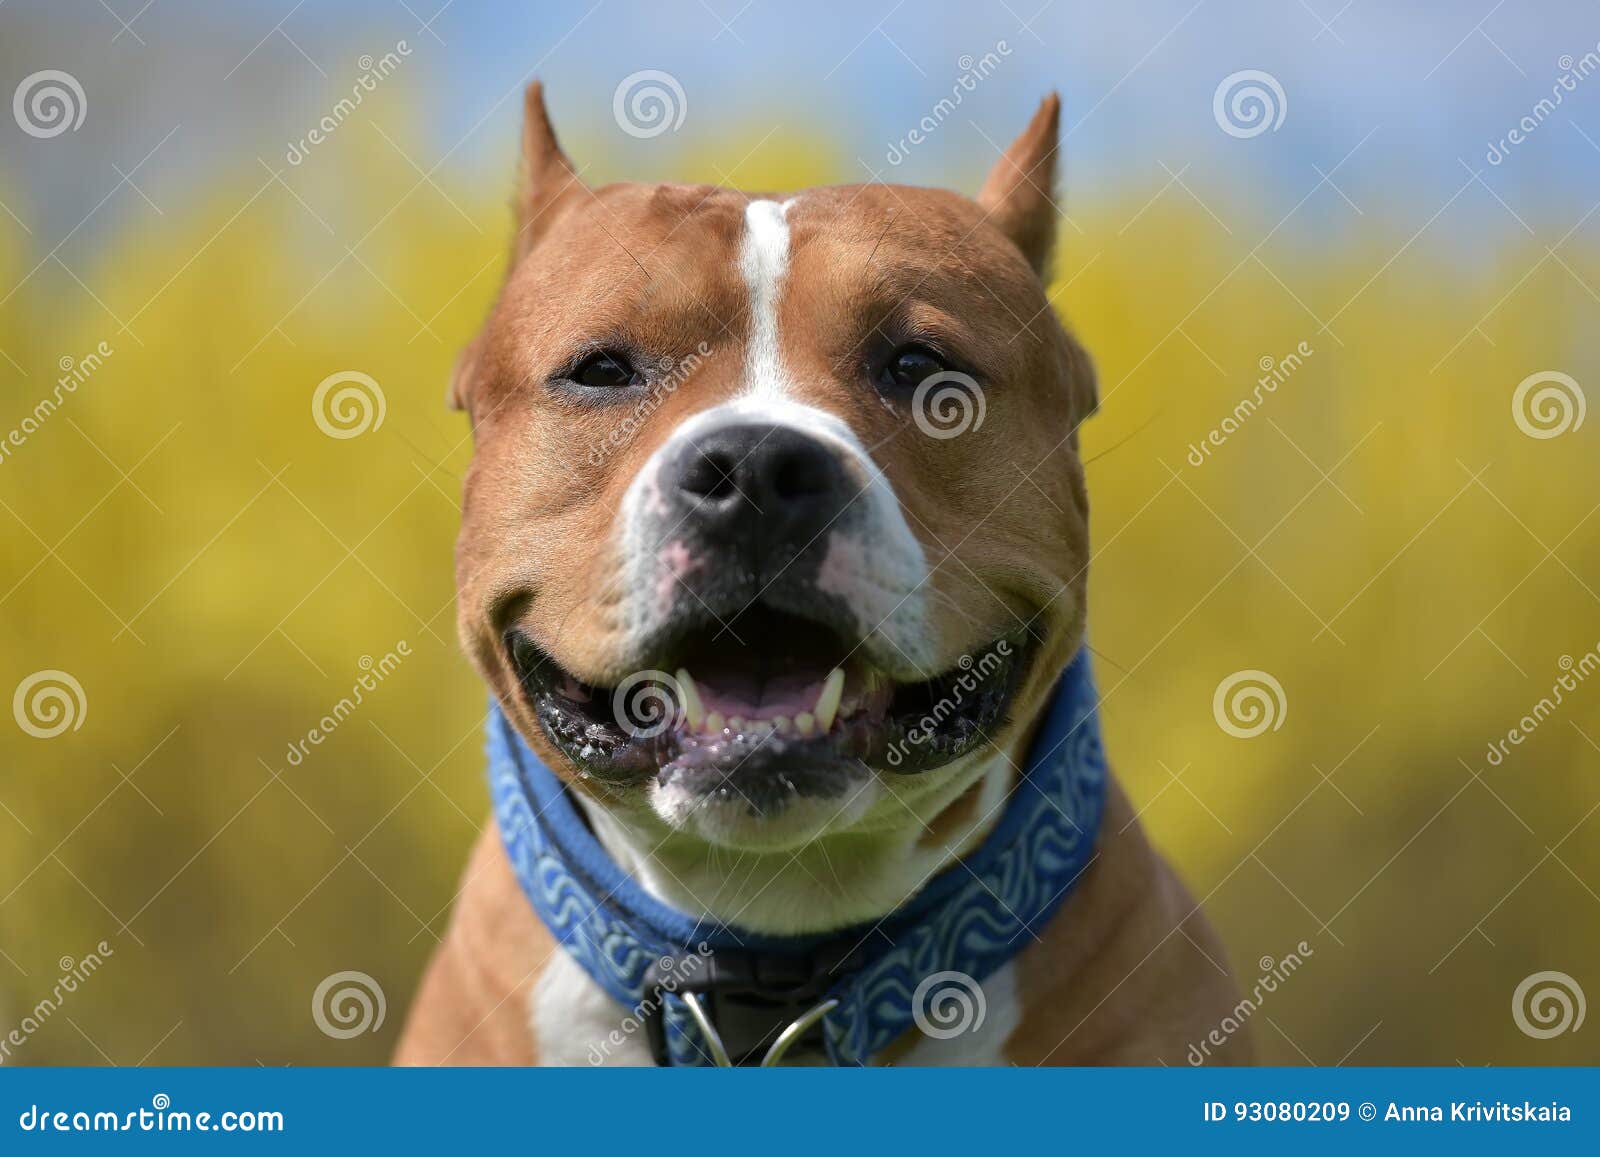 American Staffordshire Terrier Portrait Stock Image